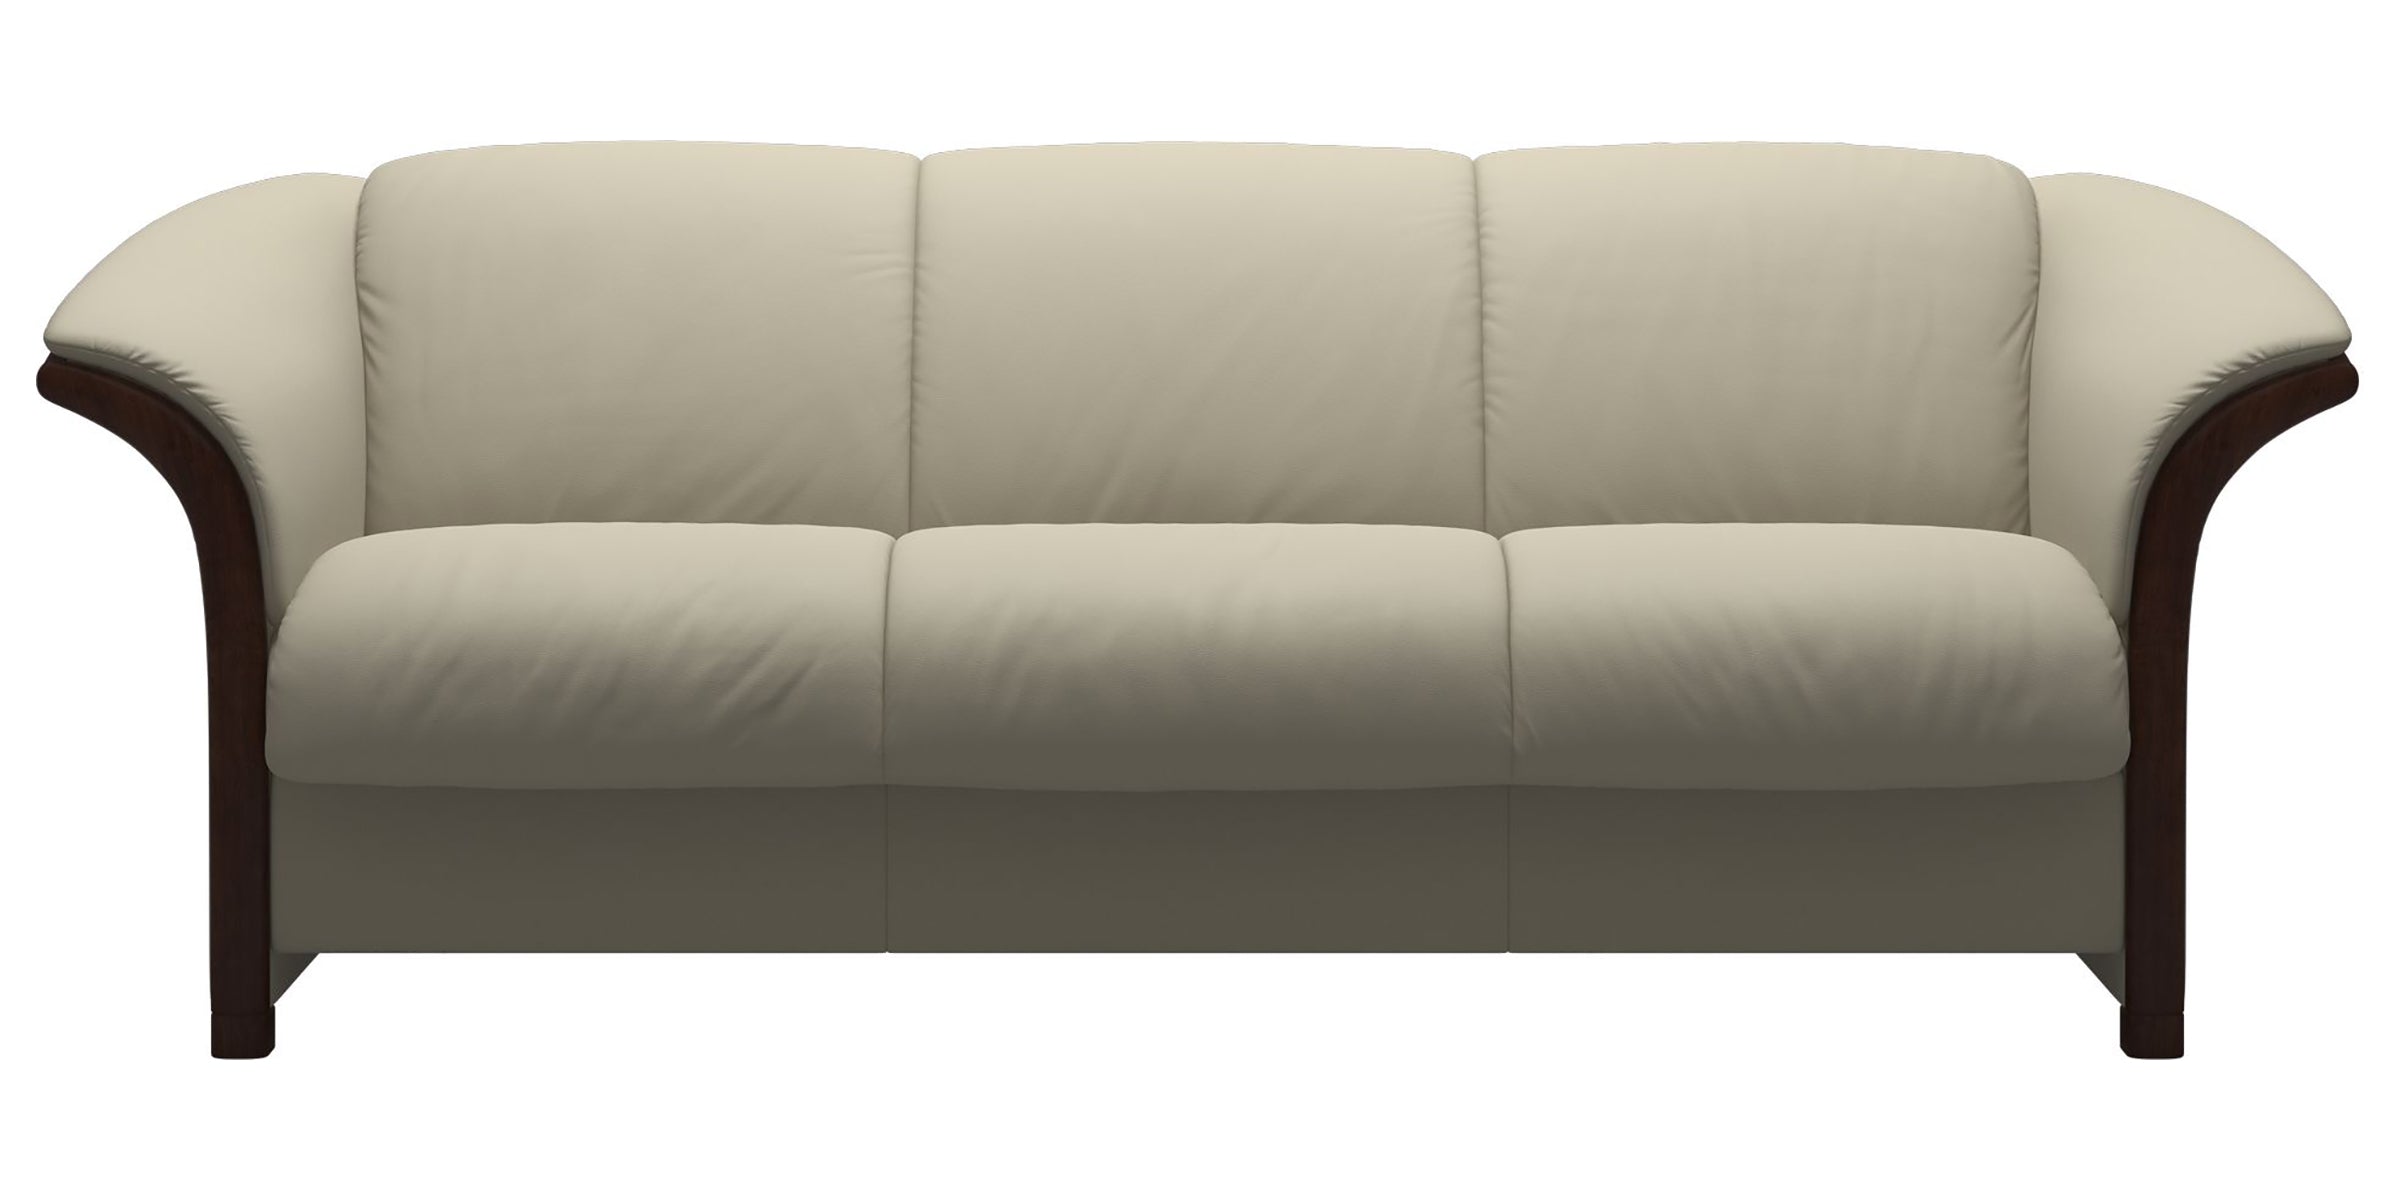 Paloma Leather Light Grey and Brown Arm Trim | Stressless Manhattan Sofa | Valley Ridge Furniture